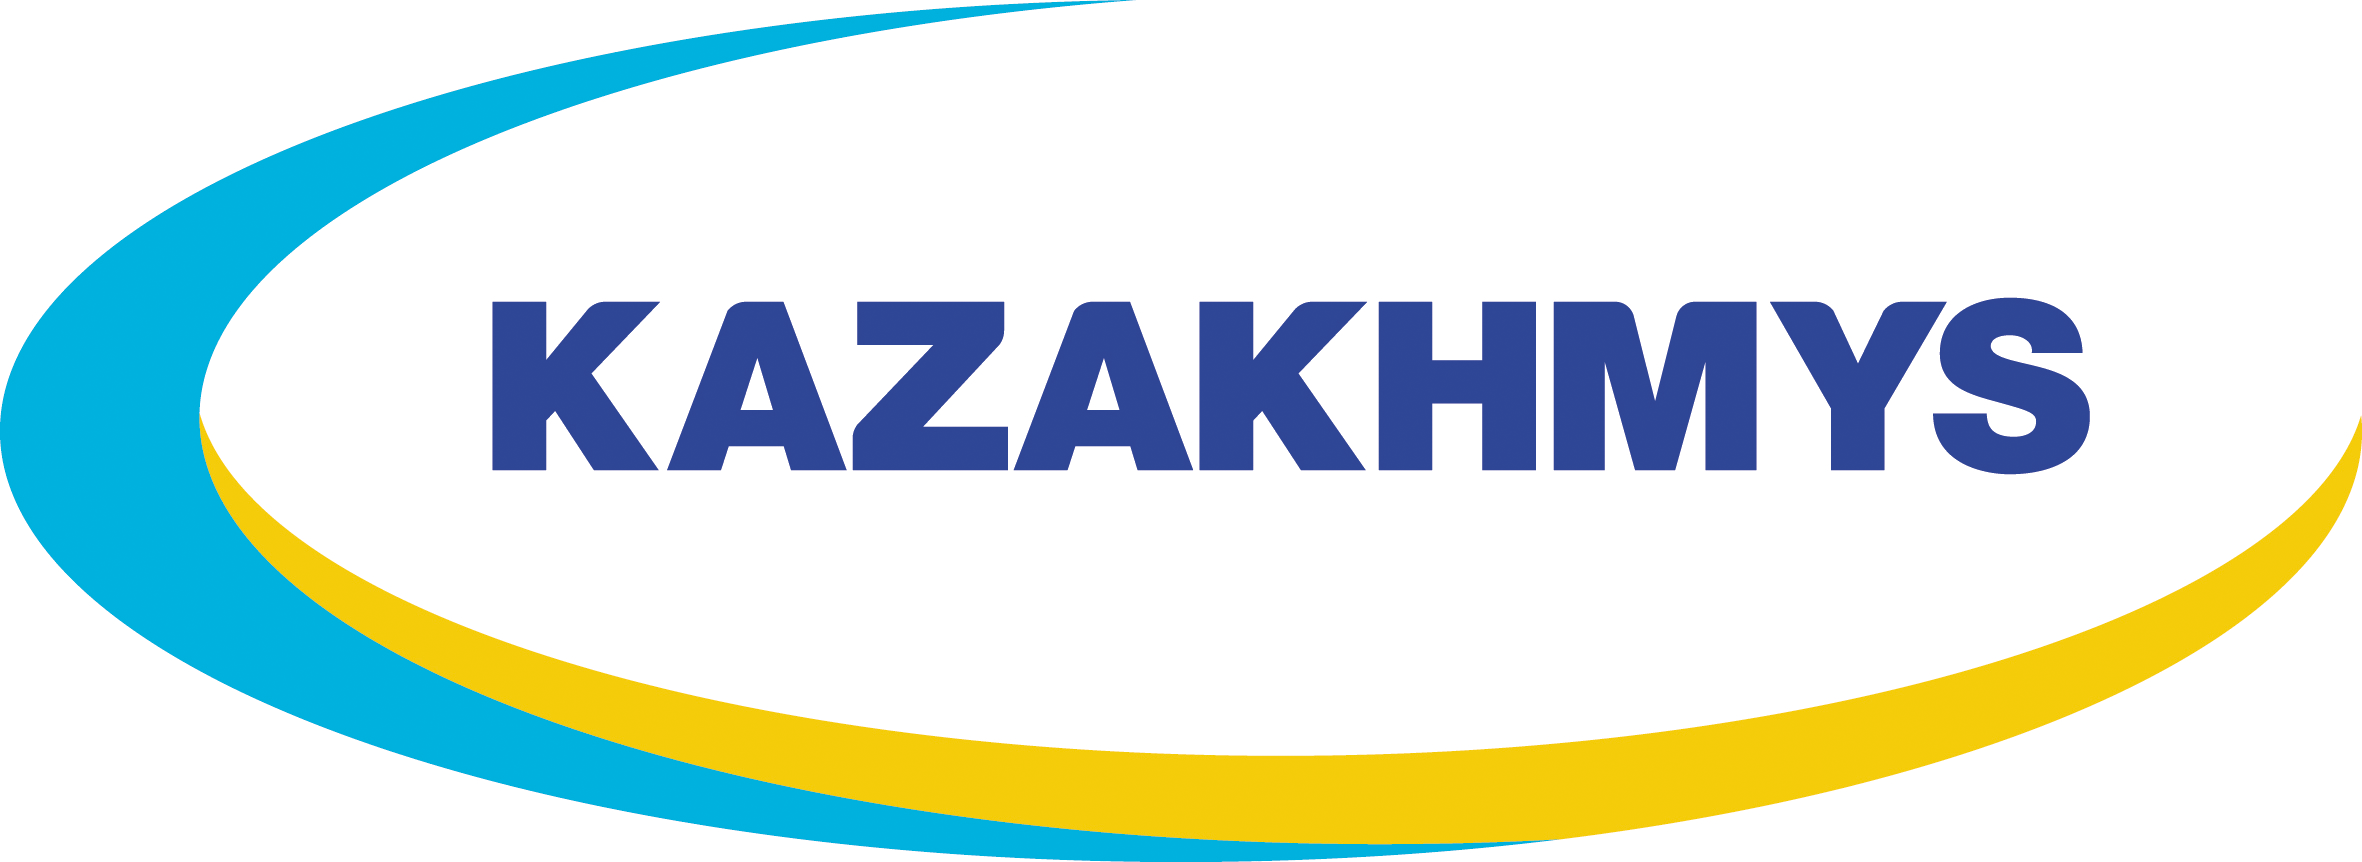 KAZAKHMYS